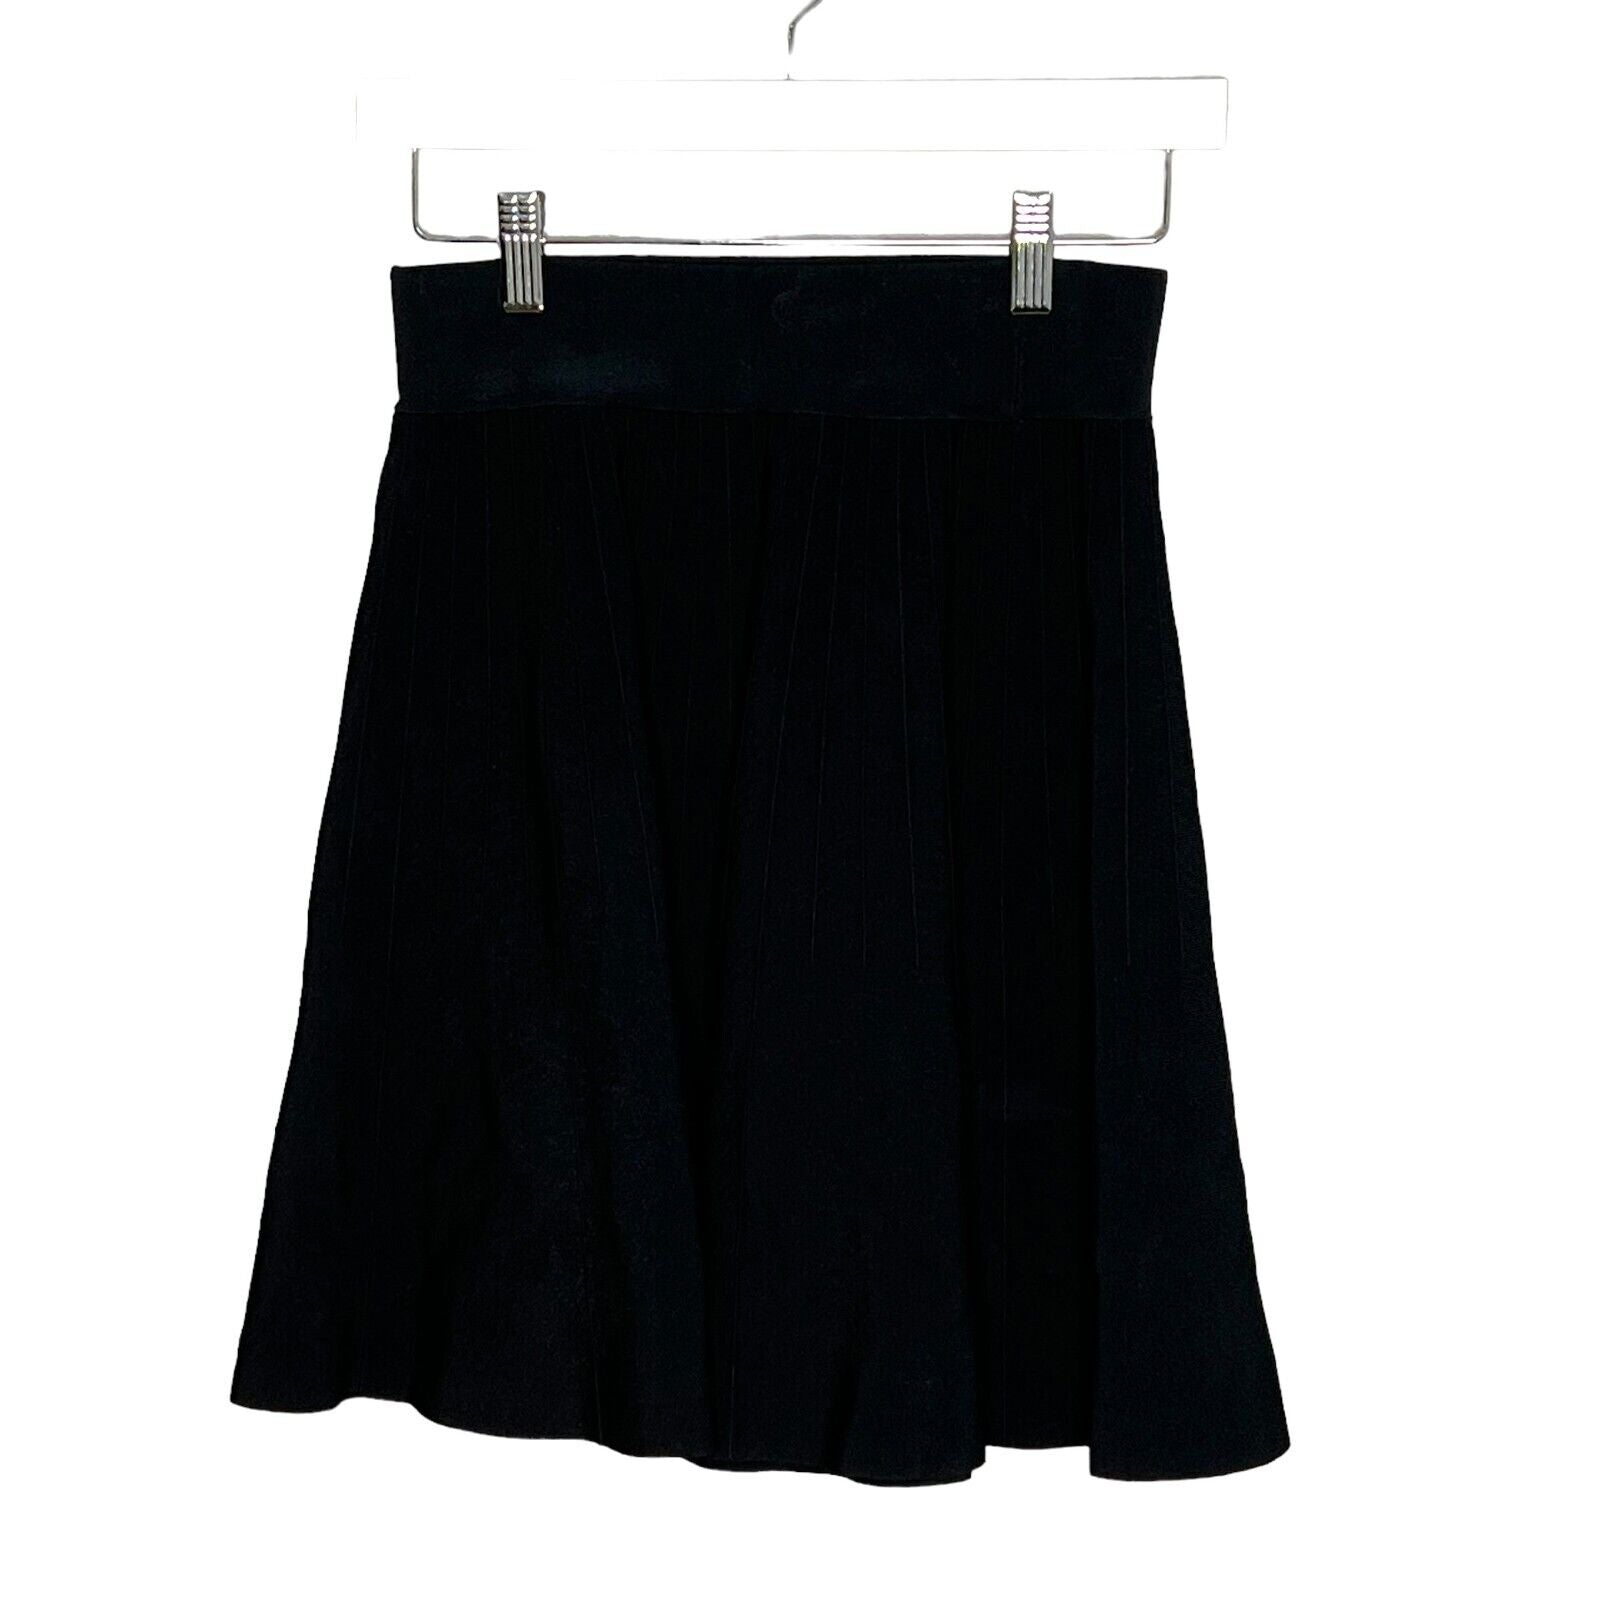 Ted Baker London Salina Black Elastic Waist Pleated Mini Skirt Size 1